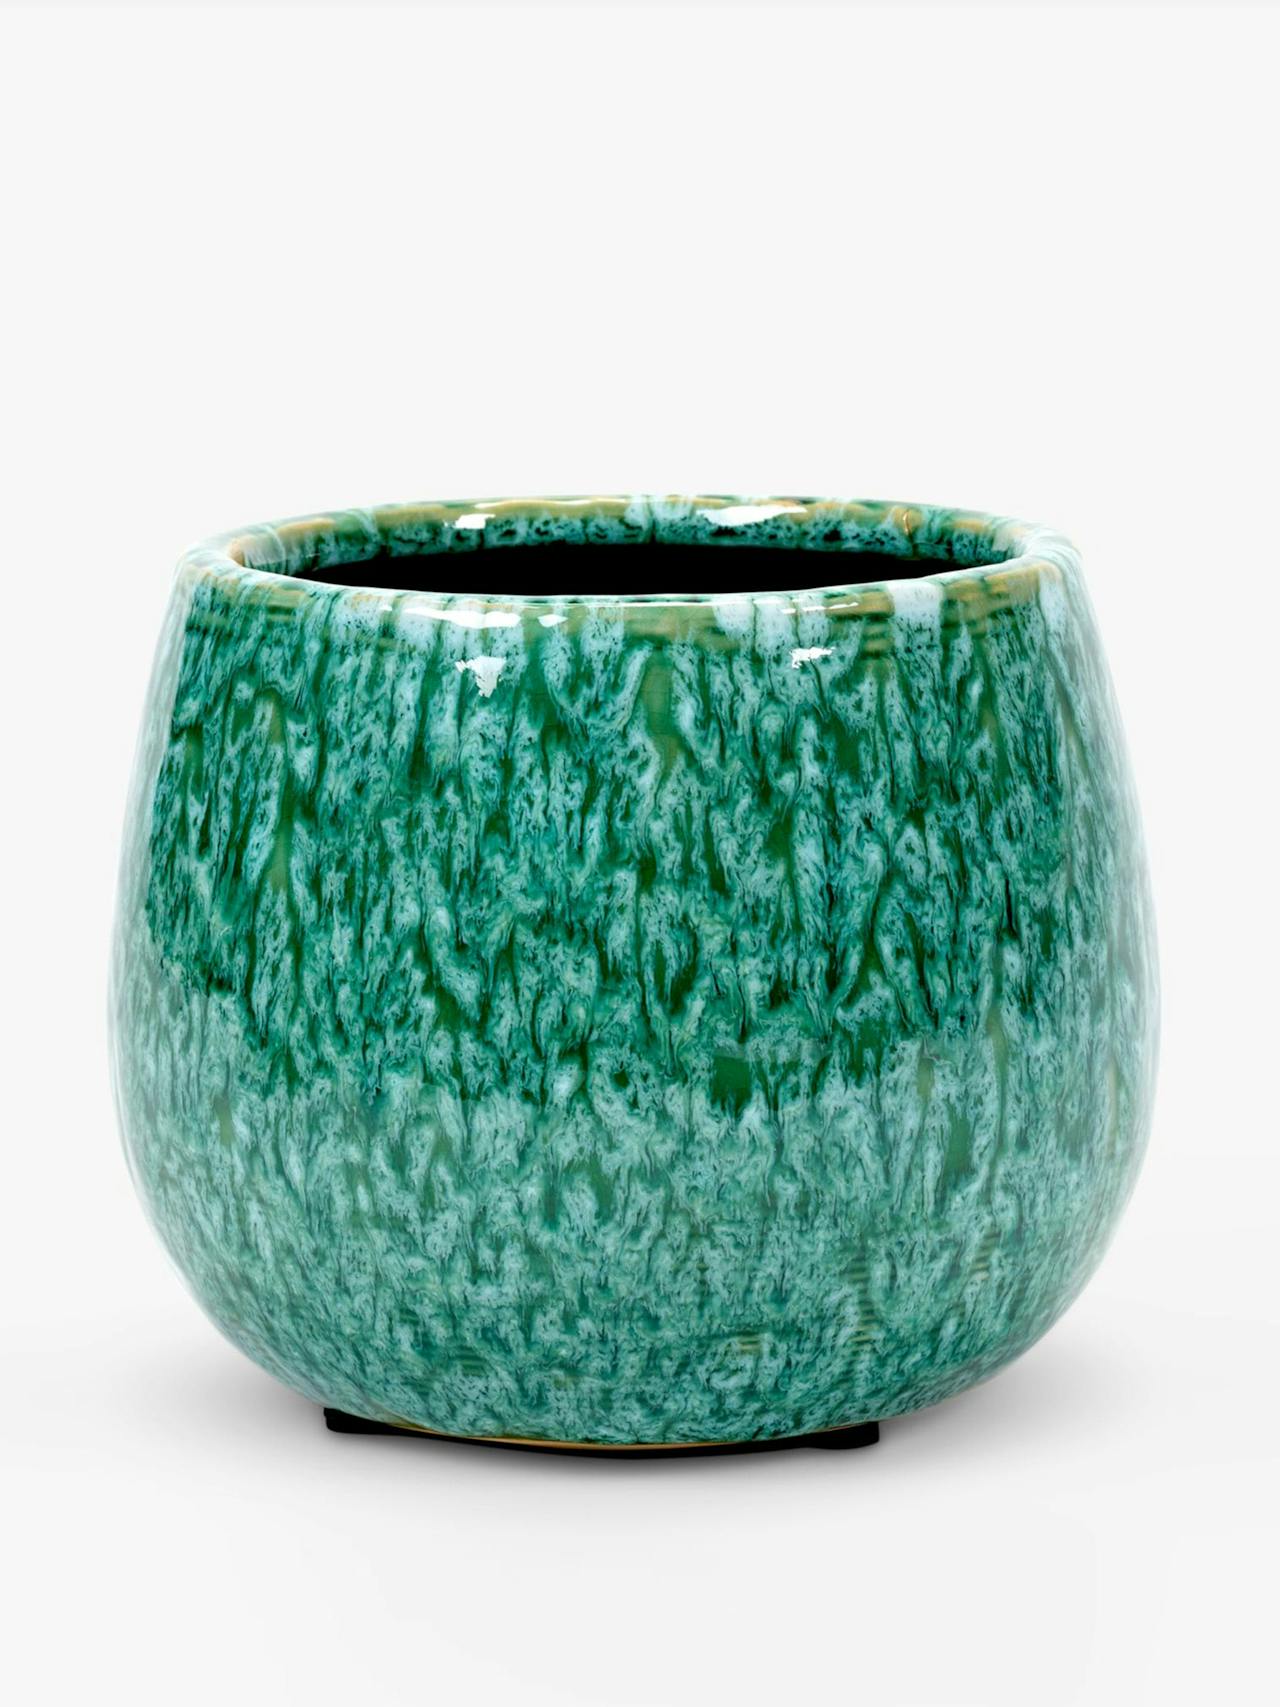 Seagrass pot